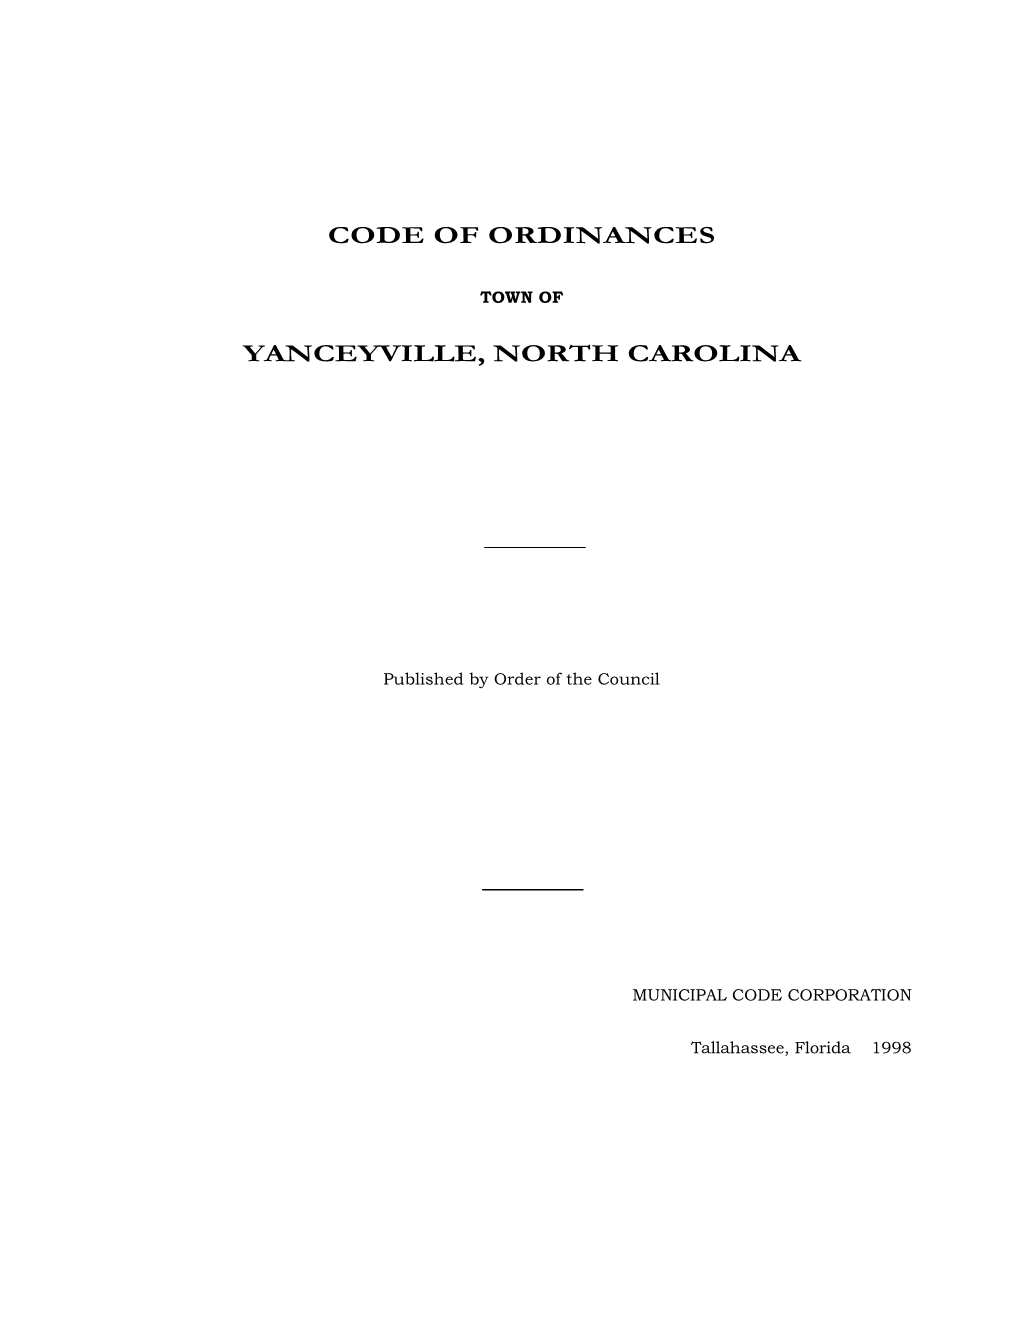 Code of Ordinances Yanceyville, North Carolina